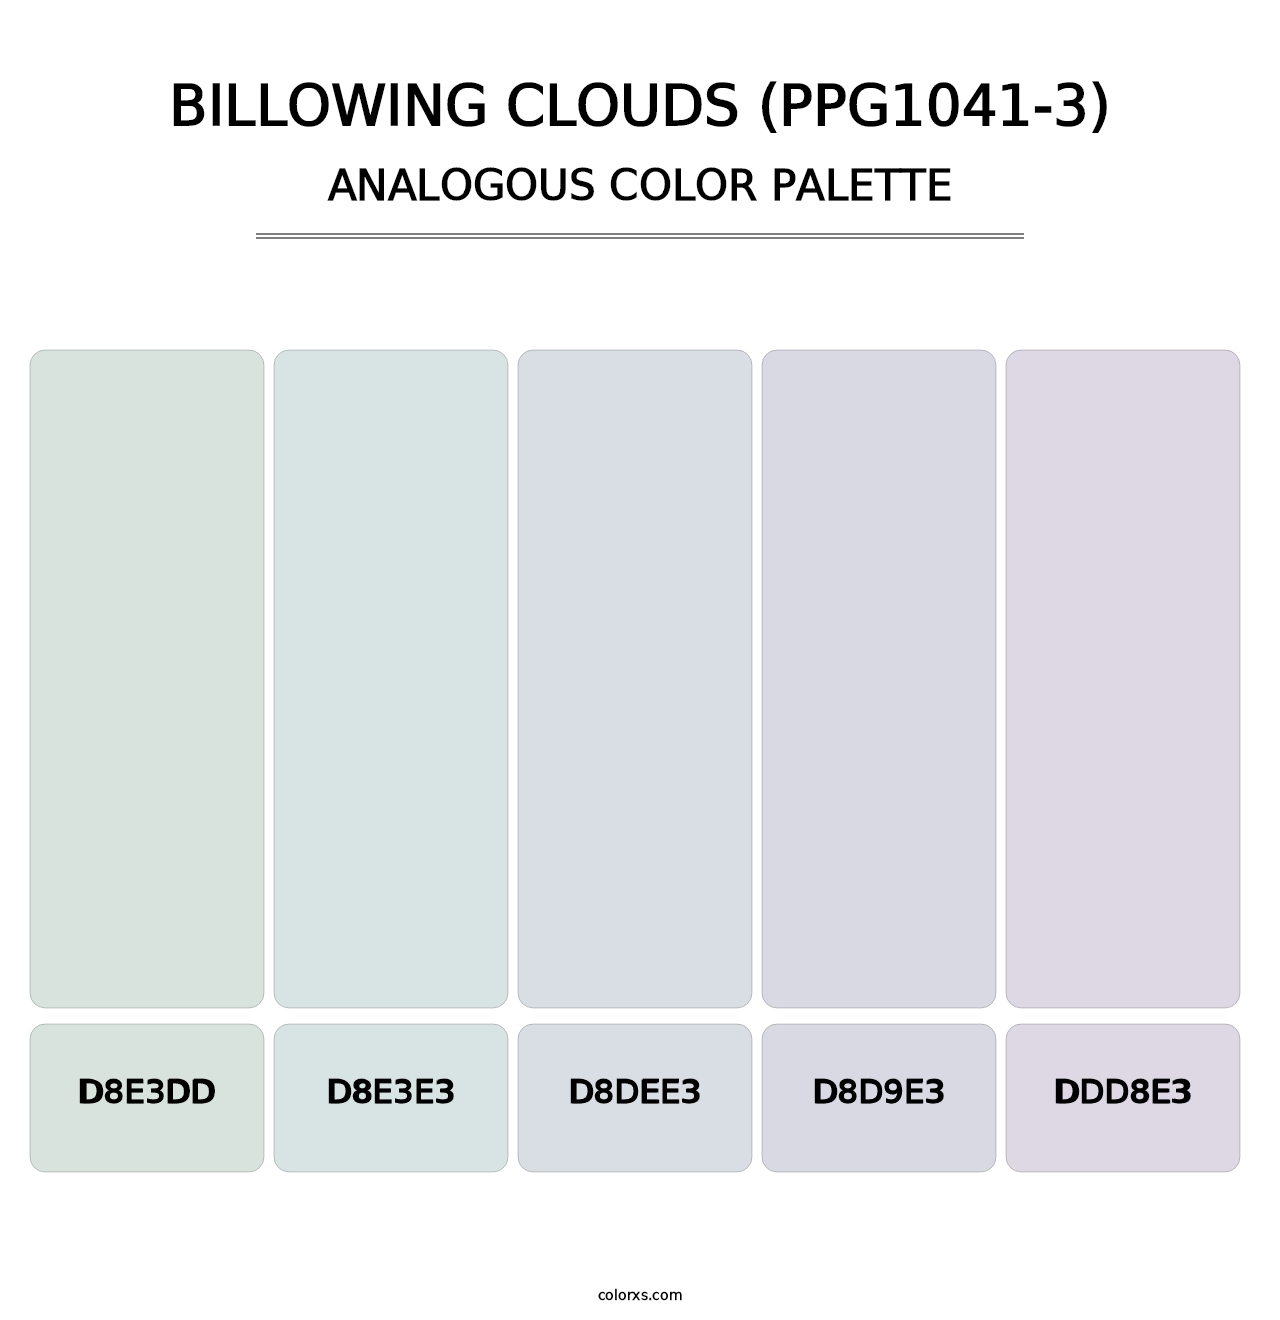 Billowing Clouds (PPG1041-3) - Analogous Color Palette